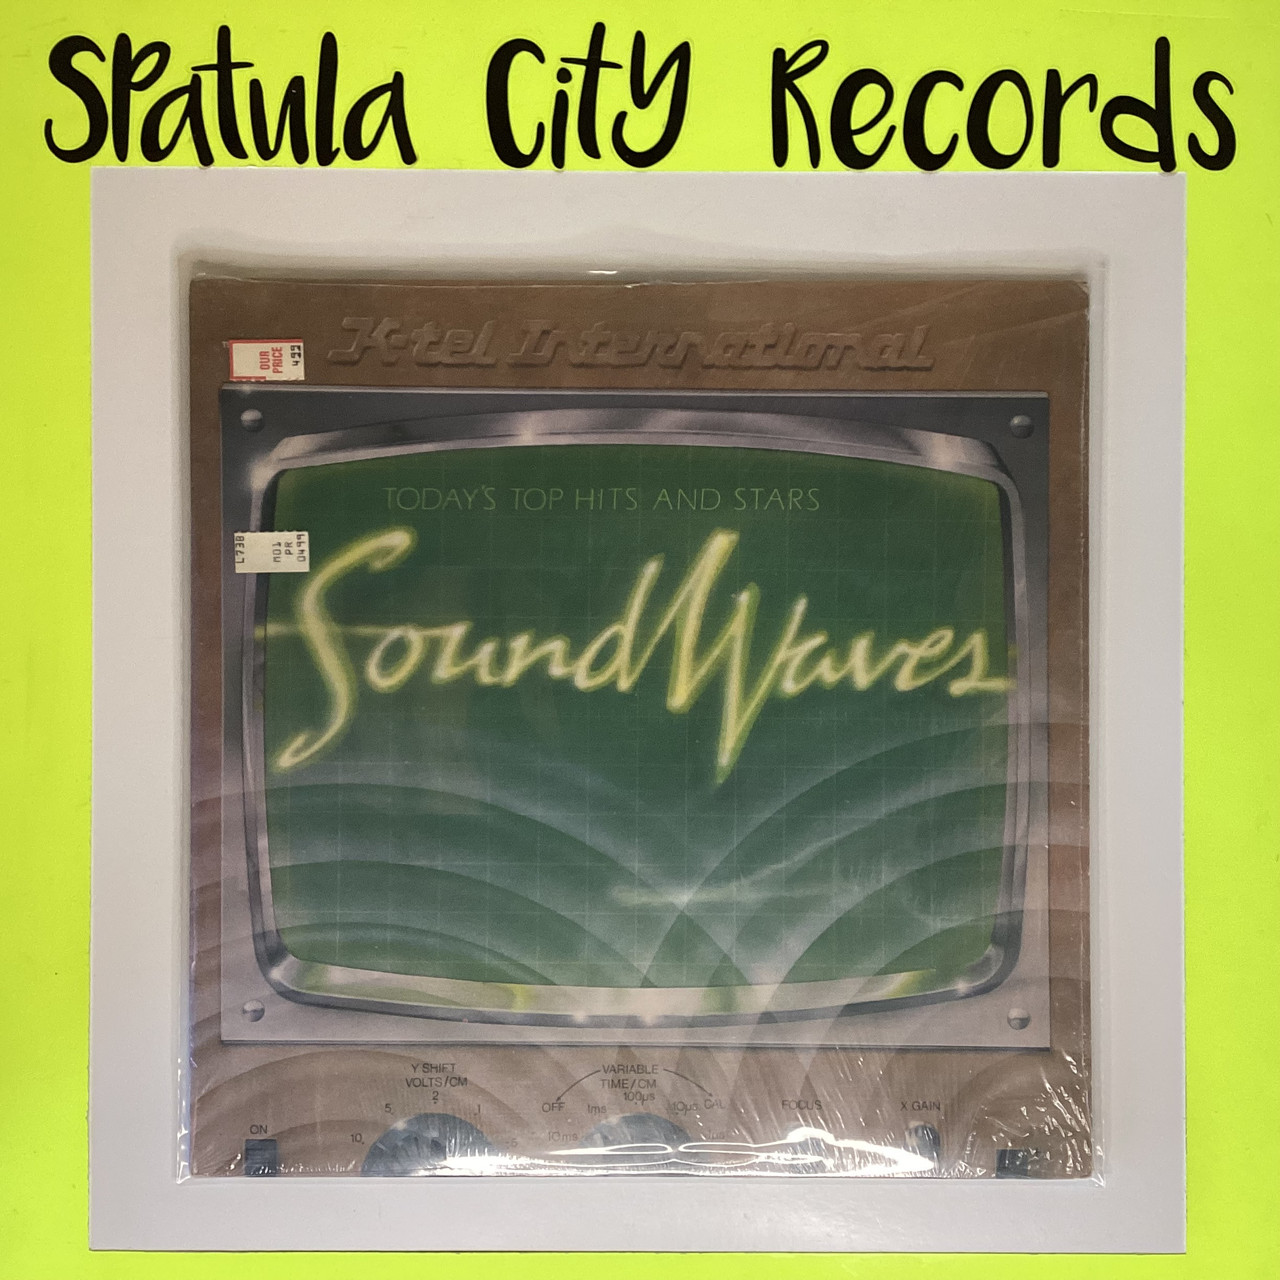 Soundwaves - compilation - vinyl record LP